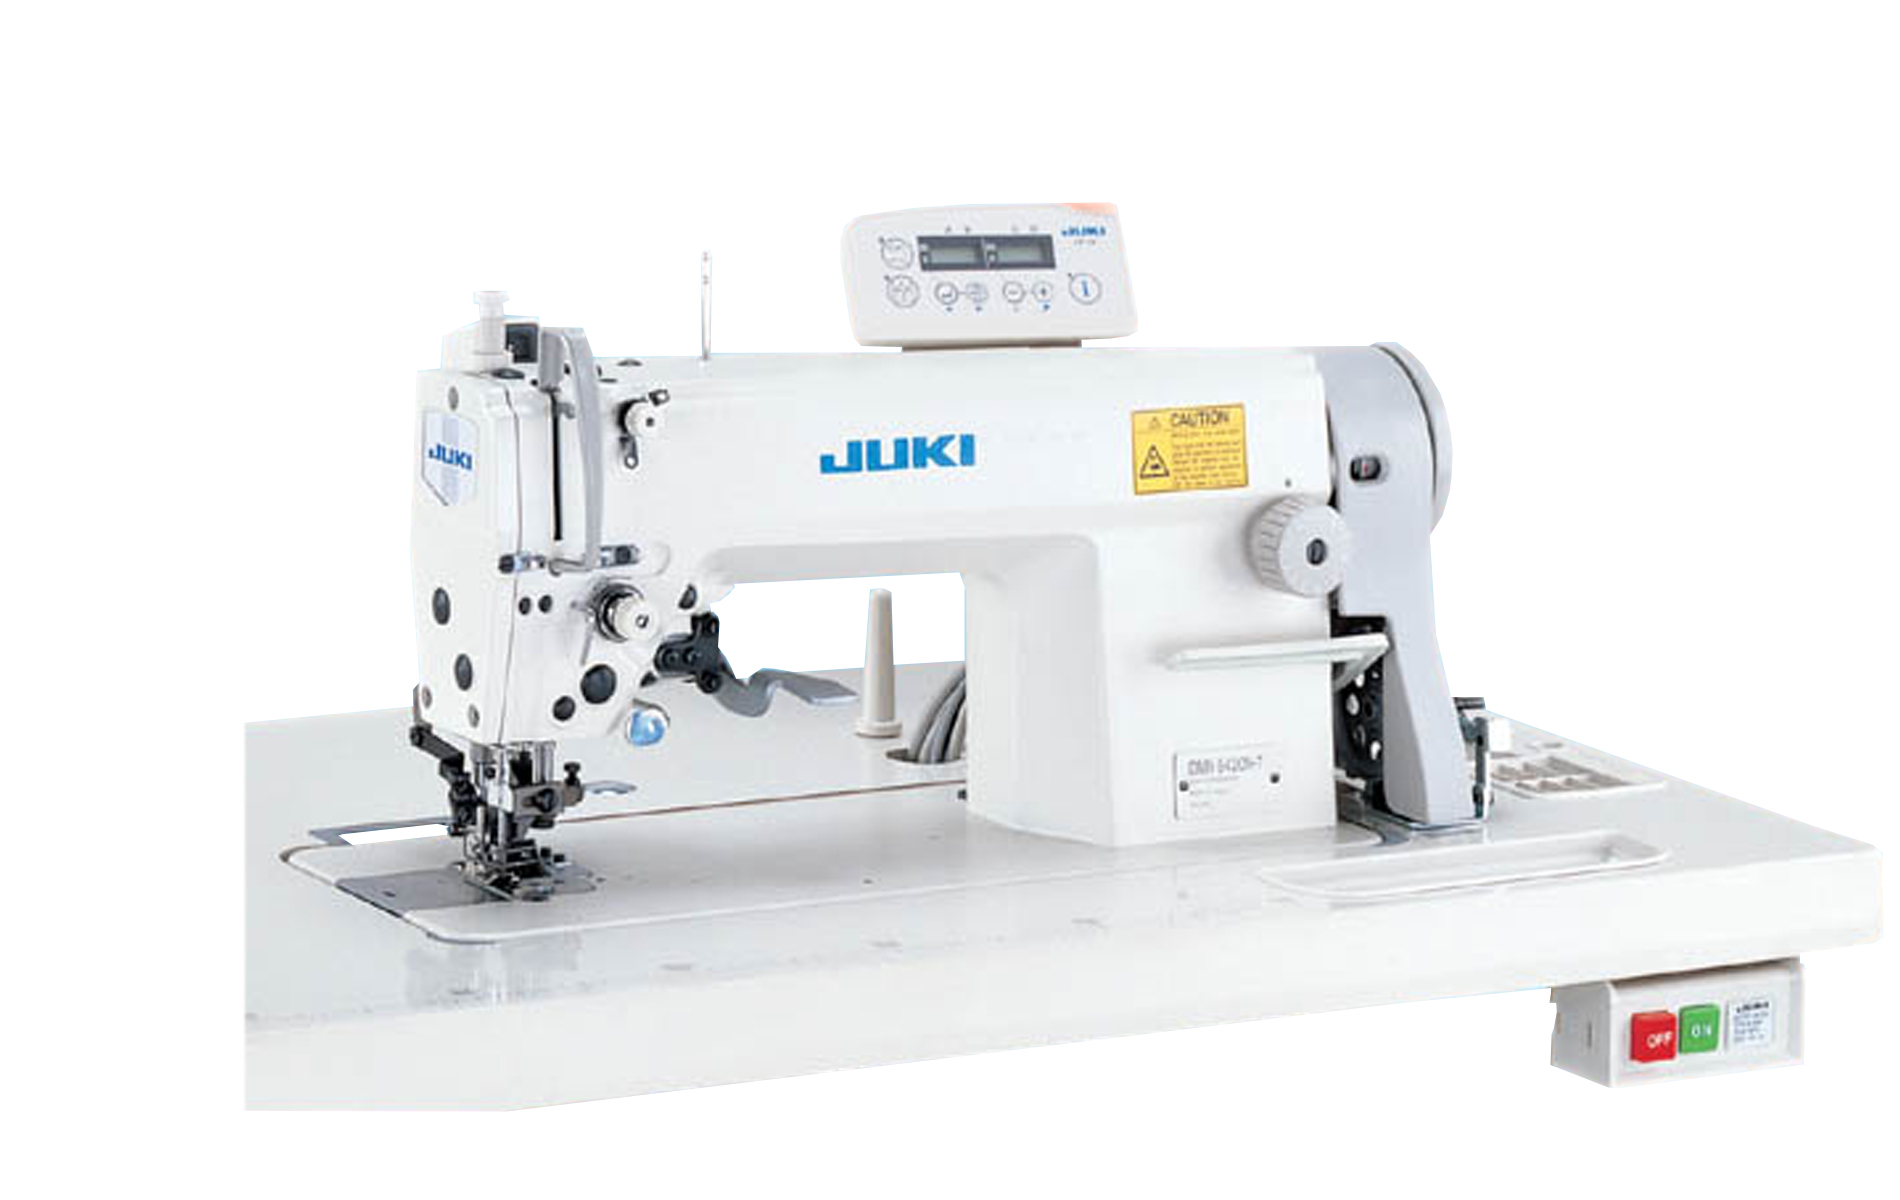 Промышленная прямострочная швейная машина купить. Juki DLN-5410n. Juki DMN-5420nfa-7-WB/AK-85. Машина швейная DLN-5410n Juki. Промышленная швейная машина Juki DLD-5430n.